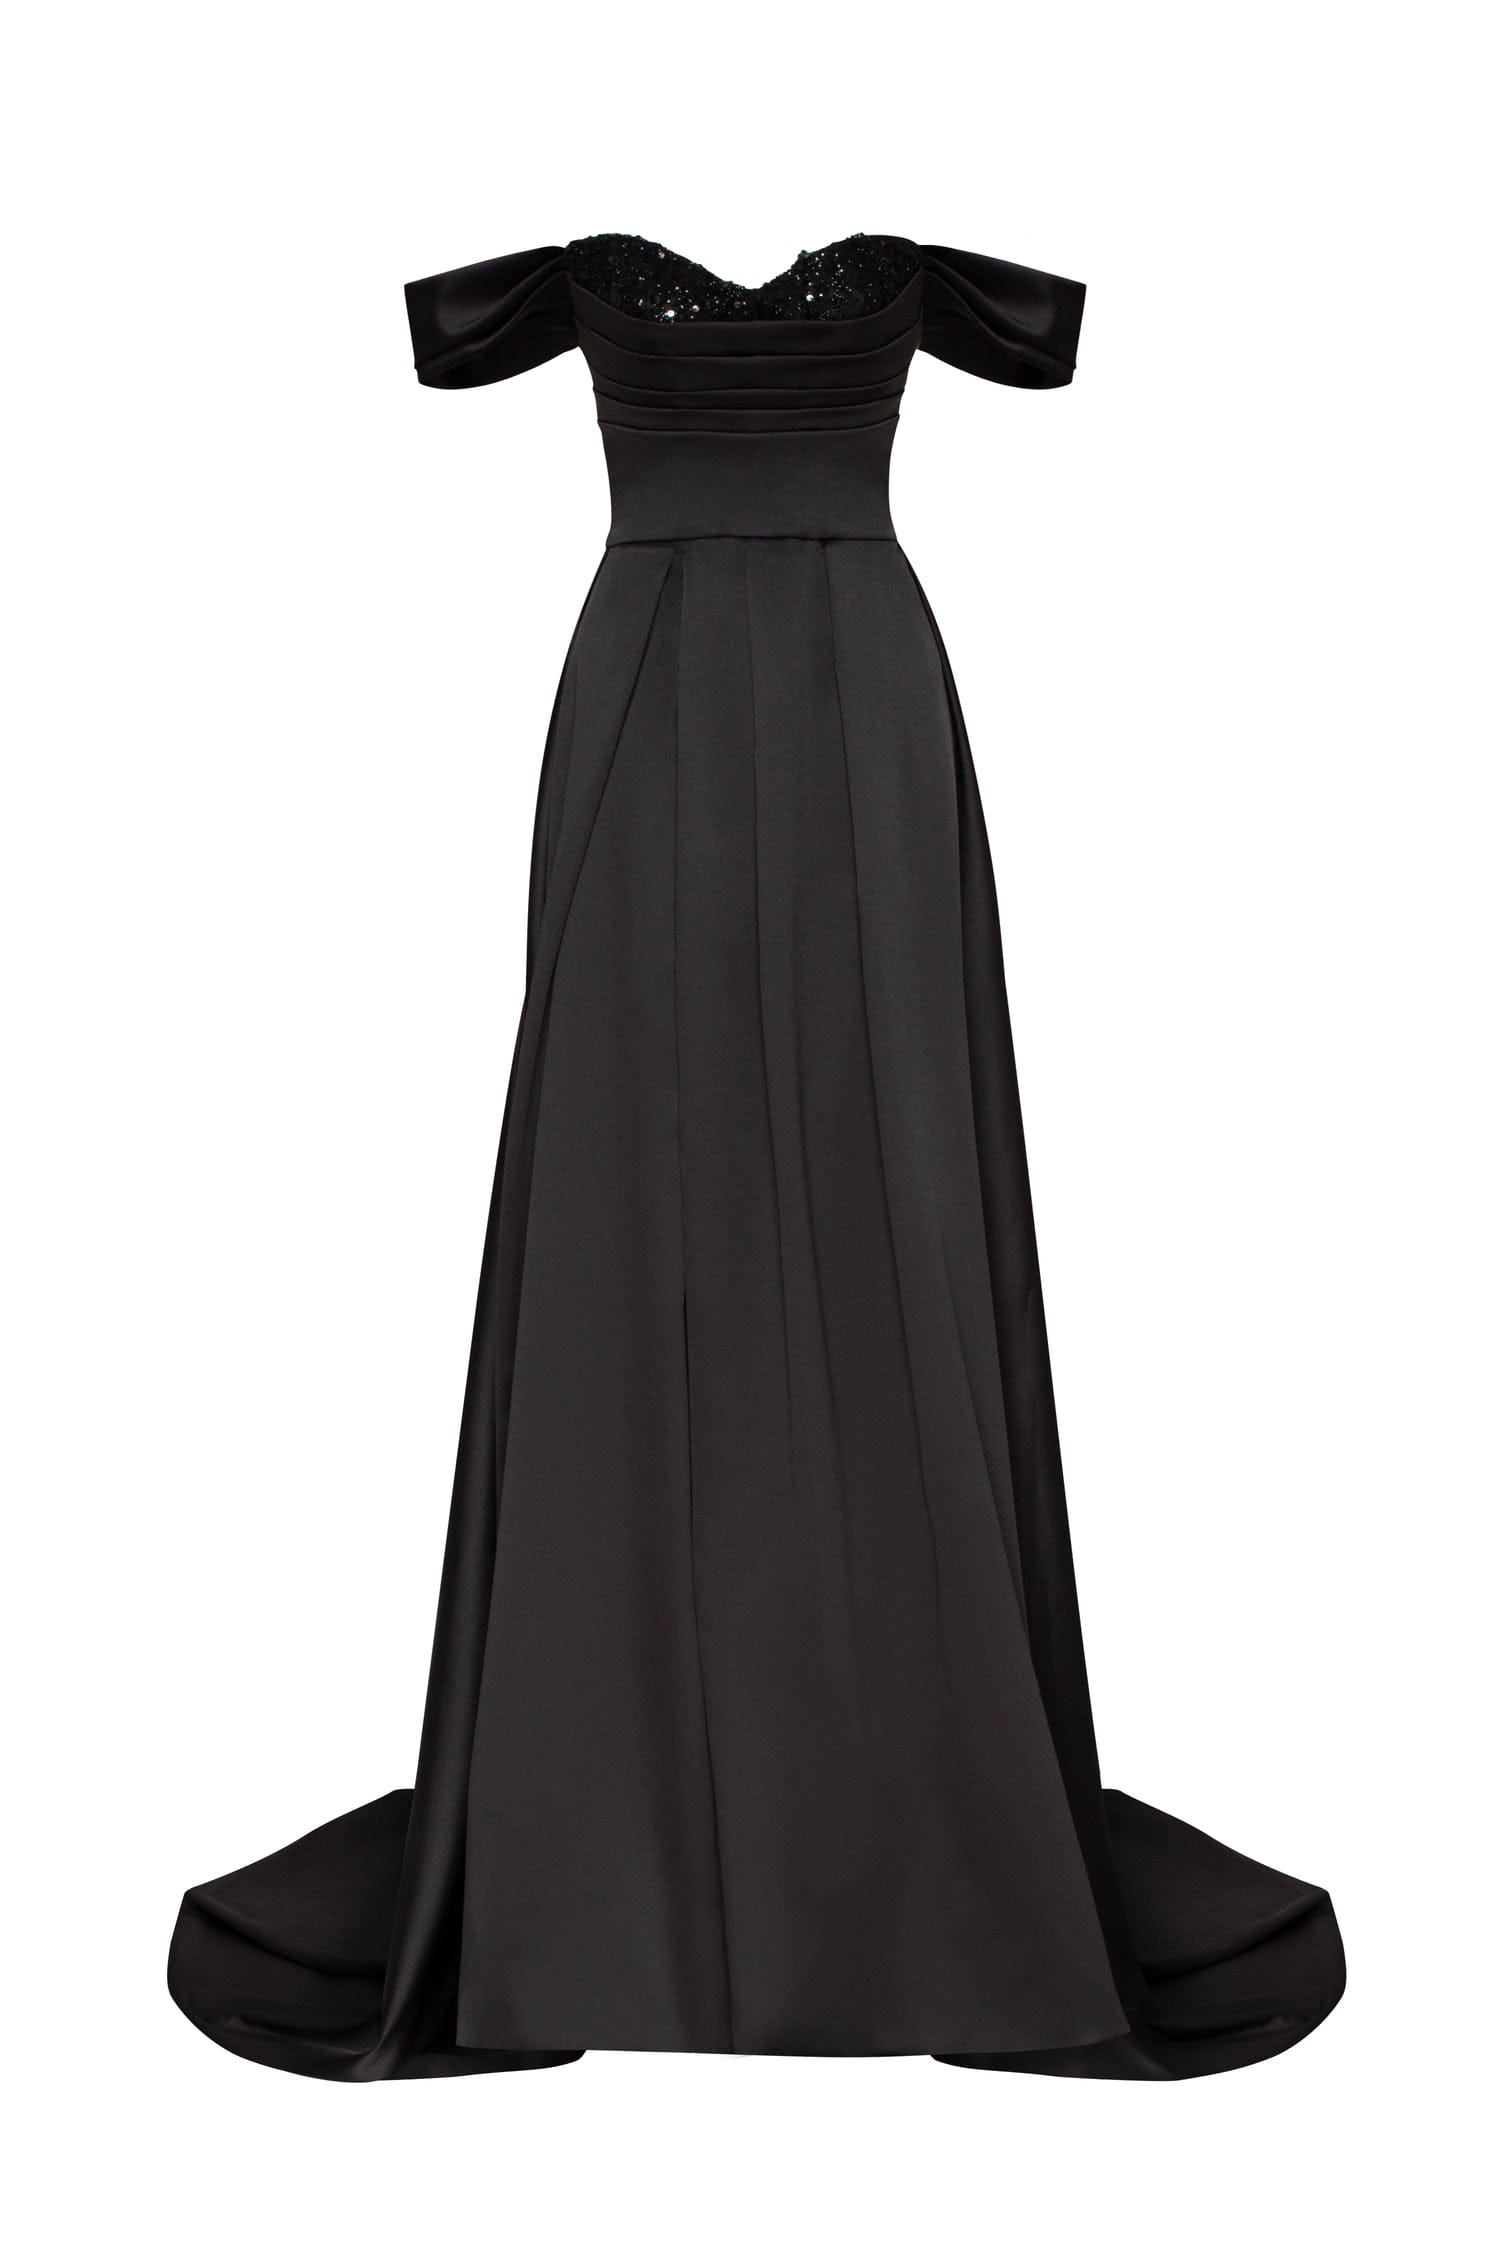 Amazon.com: Ajiovfna Women's Ball Gowns Satin Long Sleeveless Prom Dress Princess  Wedding Guest Dress Black-US2 : Clothing, Shoes & Jewelry